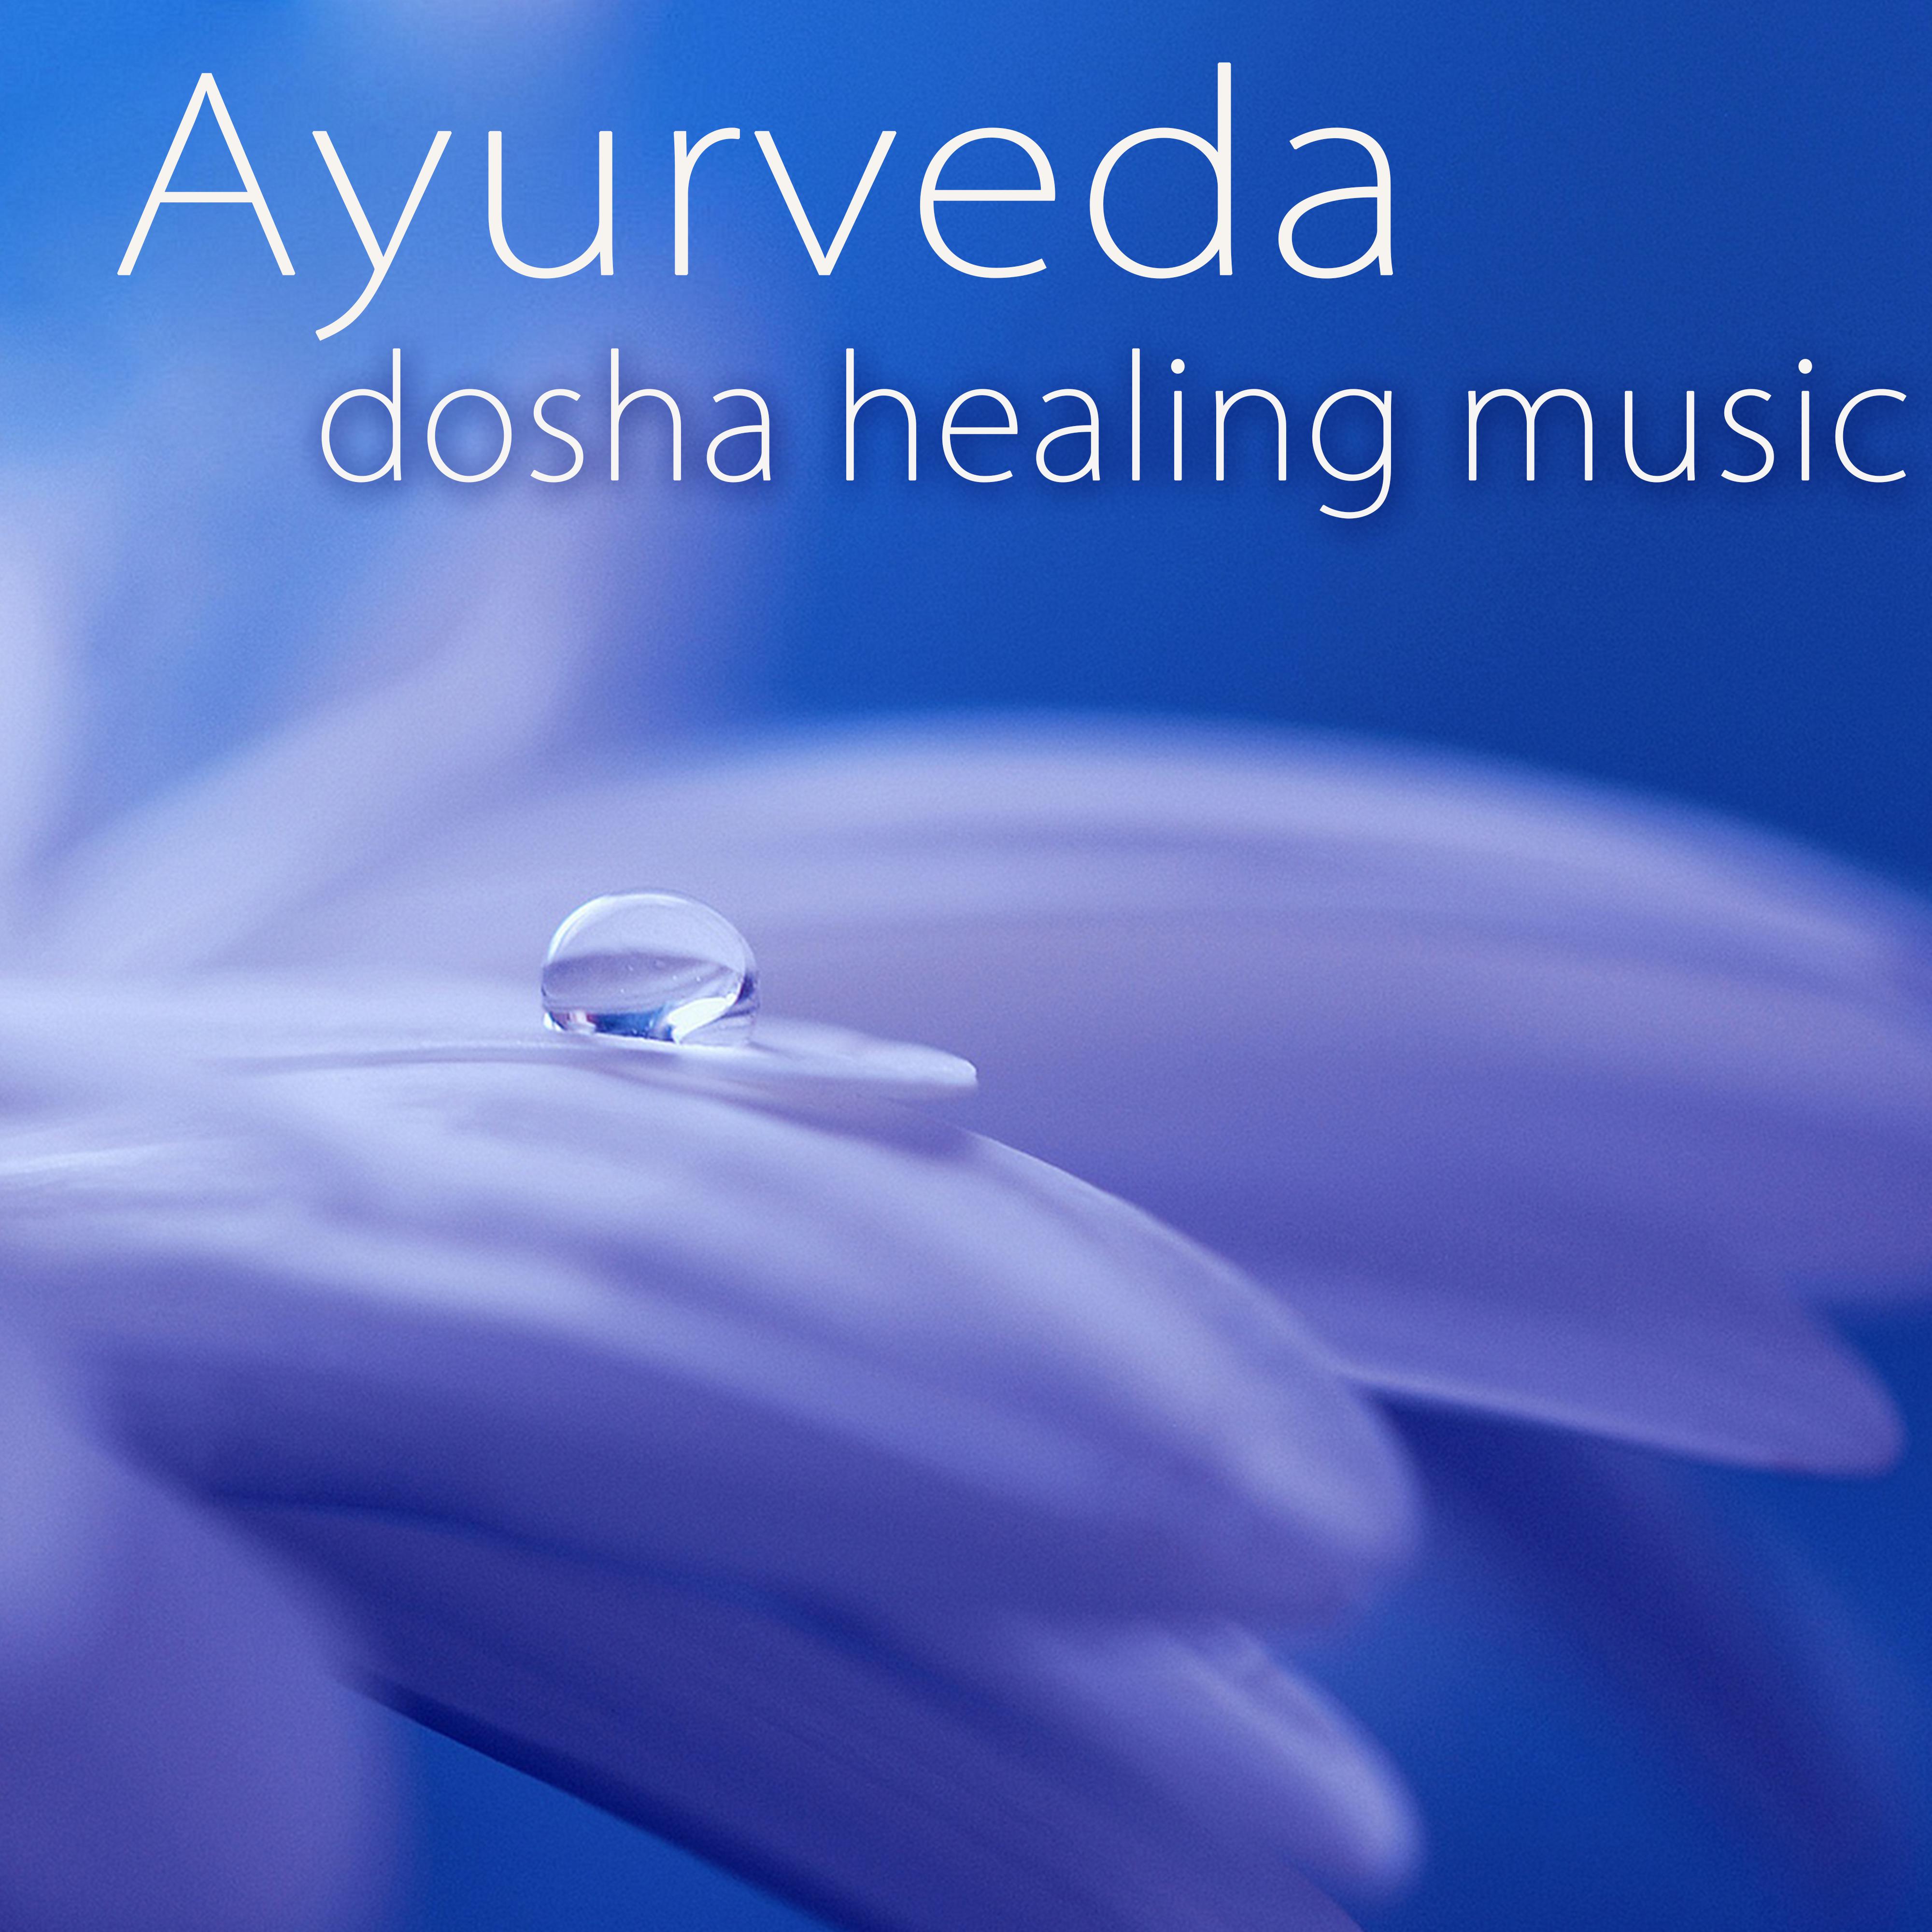 Ayurveda Dosha Healing Music  Peaceful Songs for Vata, Pitta  Kapha Doshas in Ayurvedic Holistic Health  Massage